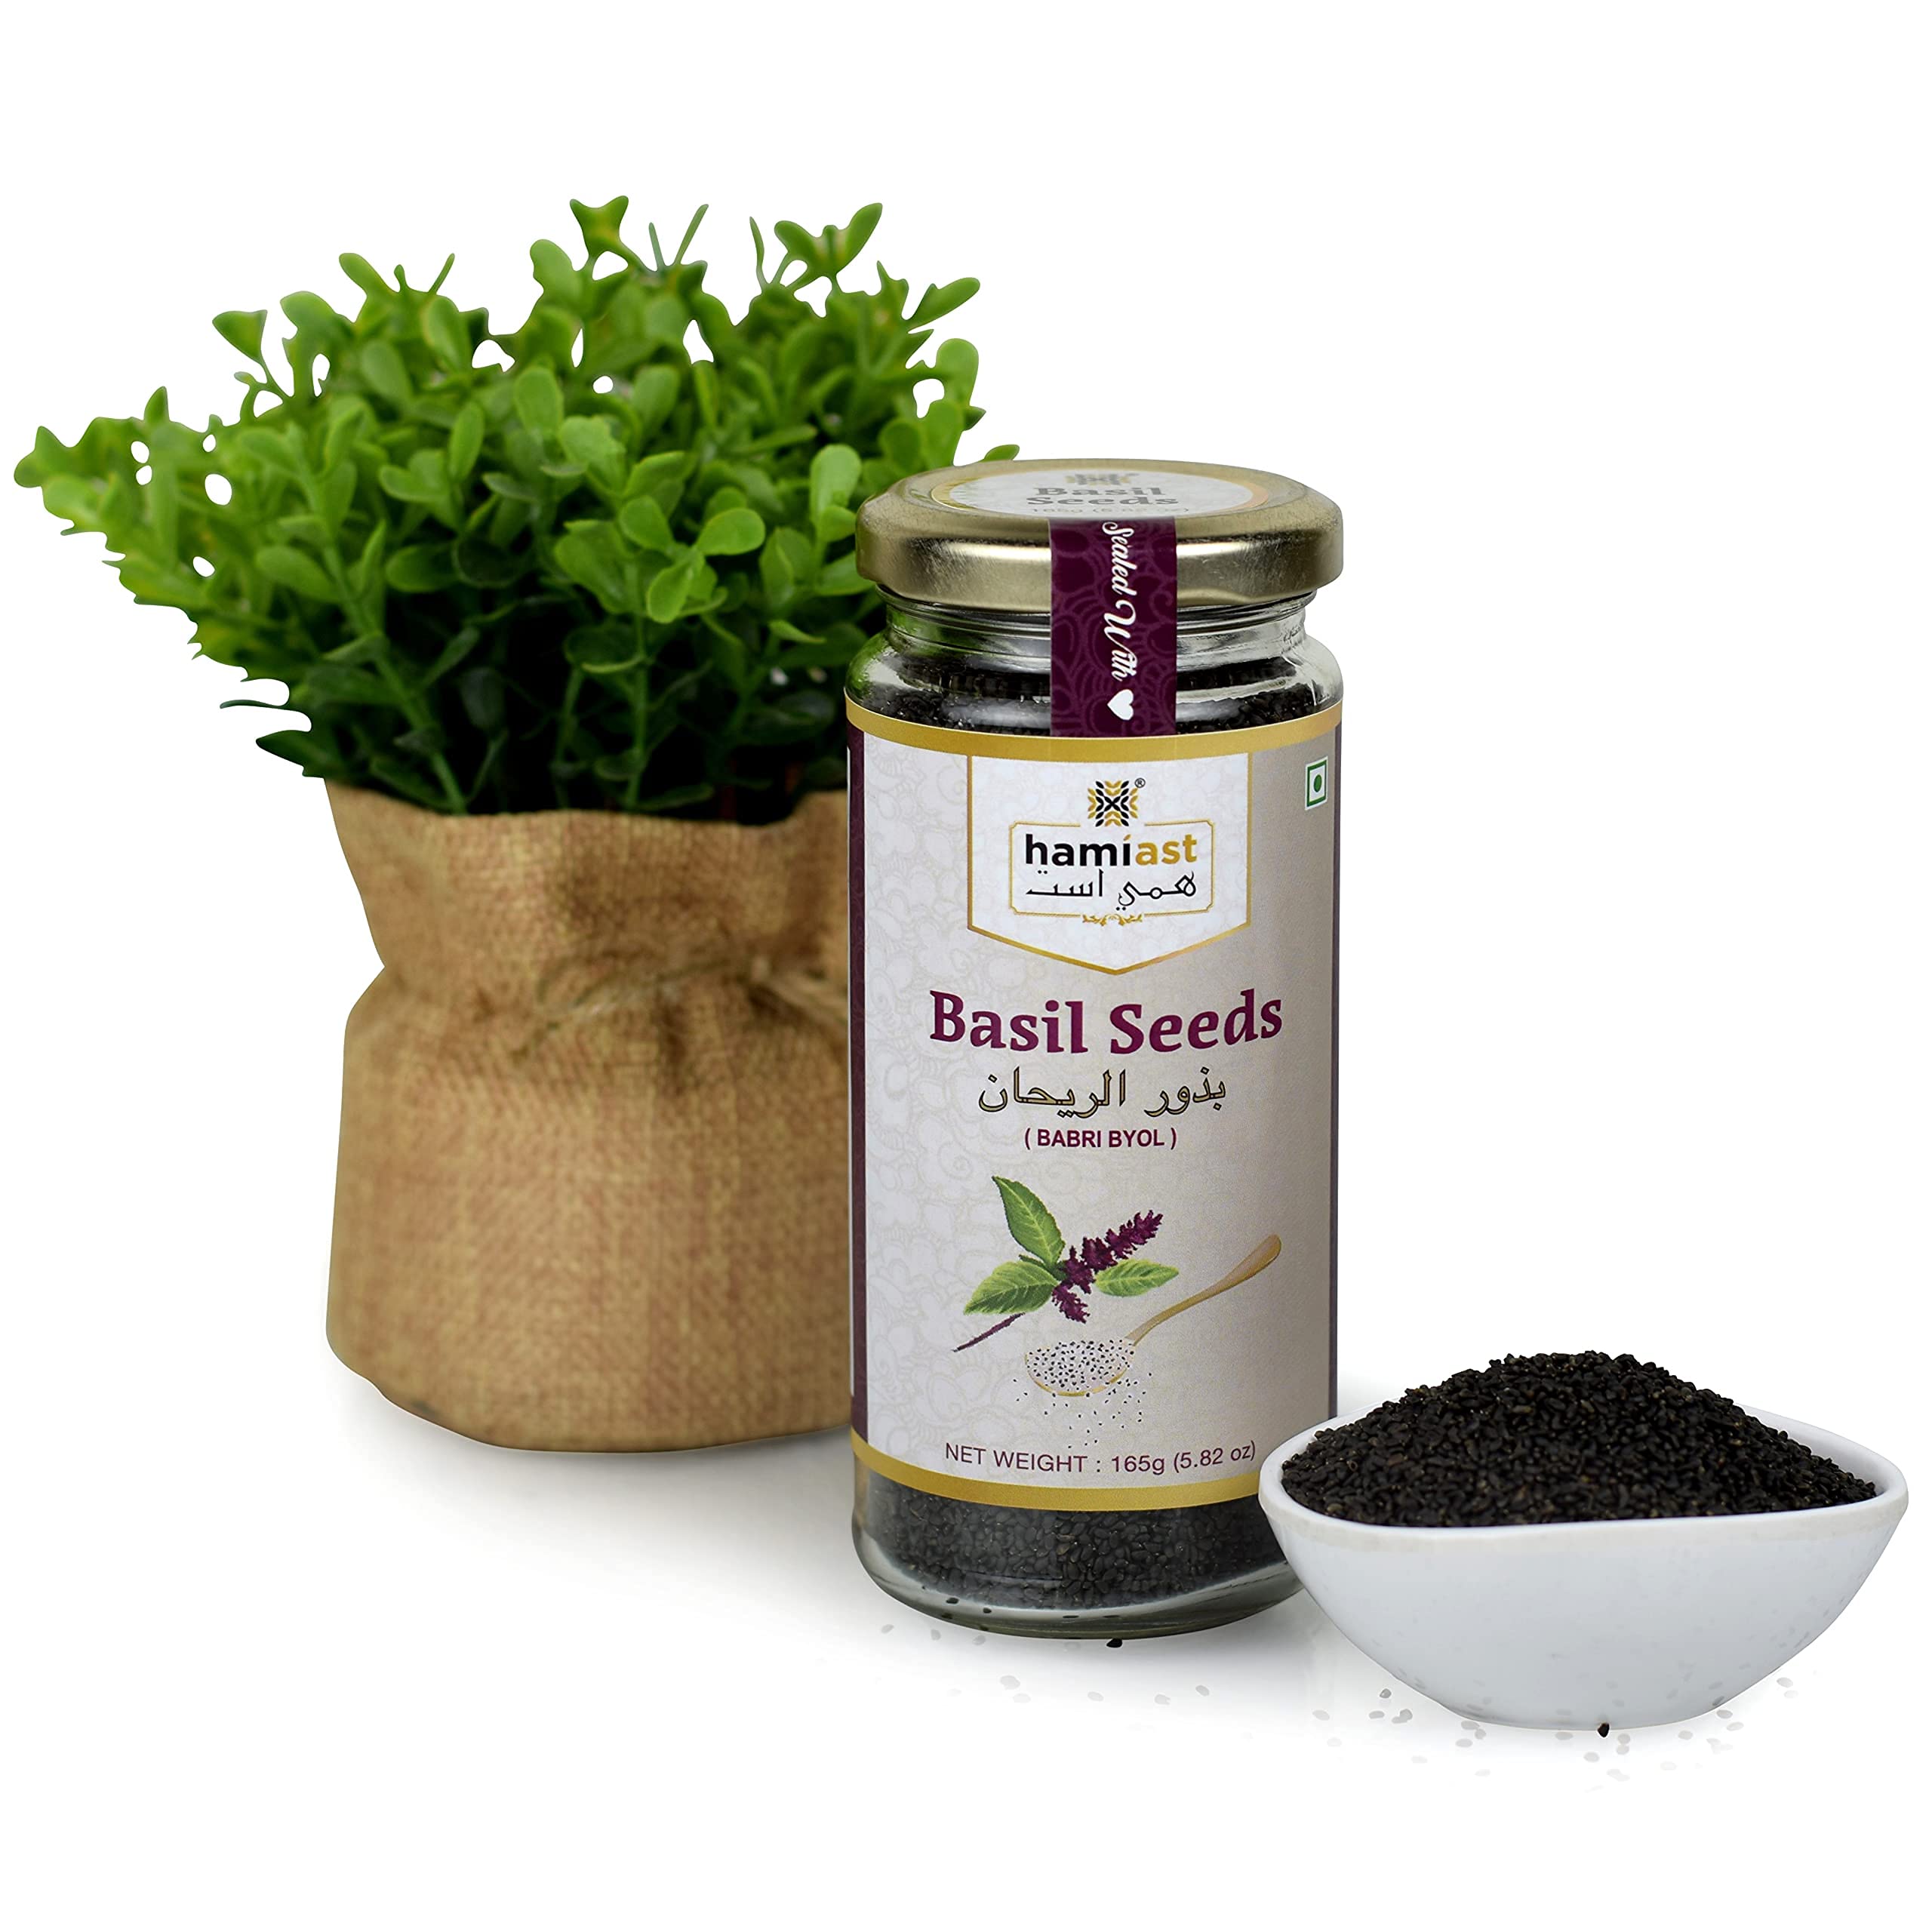 Hamiast Raw Basil Seeds, Sabja, Tukmaria, Babri Byol 300g for Weight Loss (150g Pack of 2) Premium